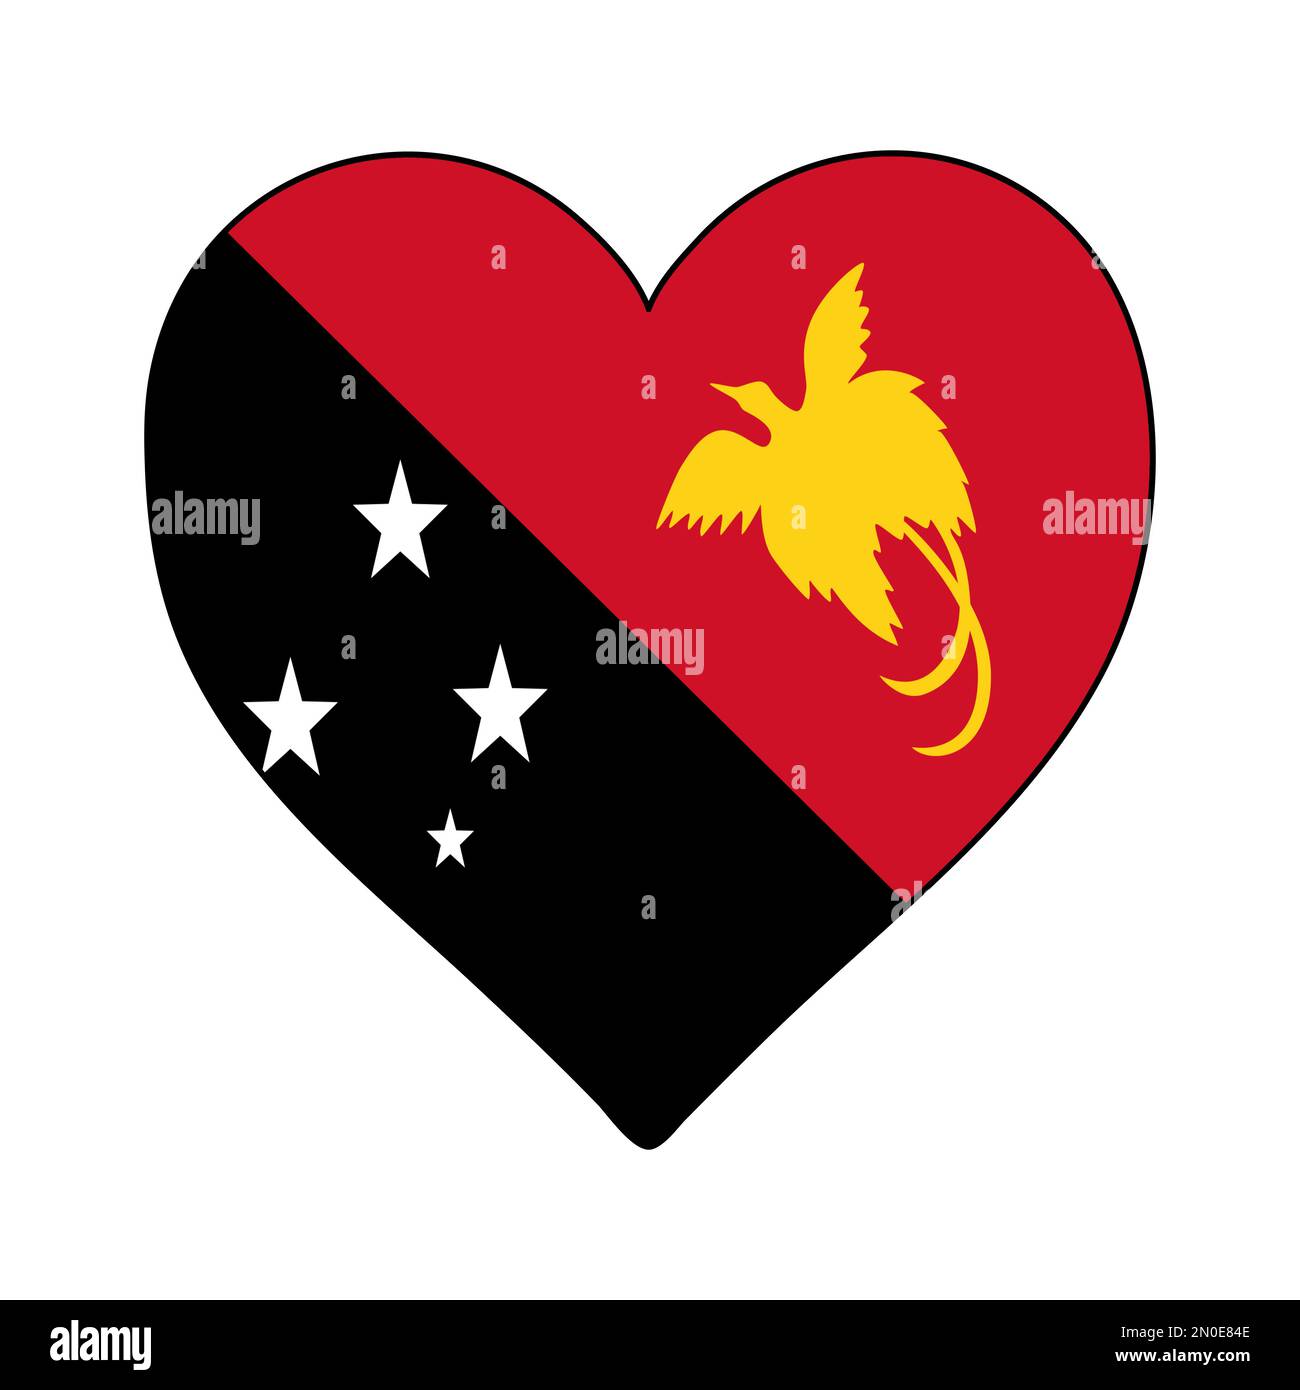 Papua New Guinea Heart Shape Flag. Love Papua New Guinea. Visit Papua New Guinea. Vector Illustration Graphic Design. Stock Vector